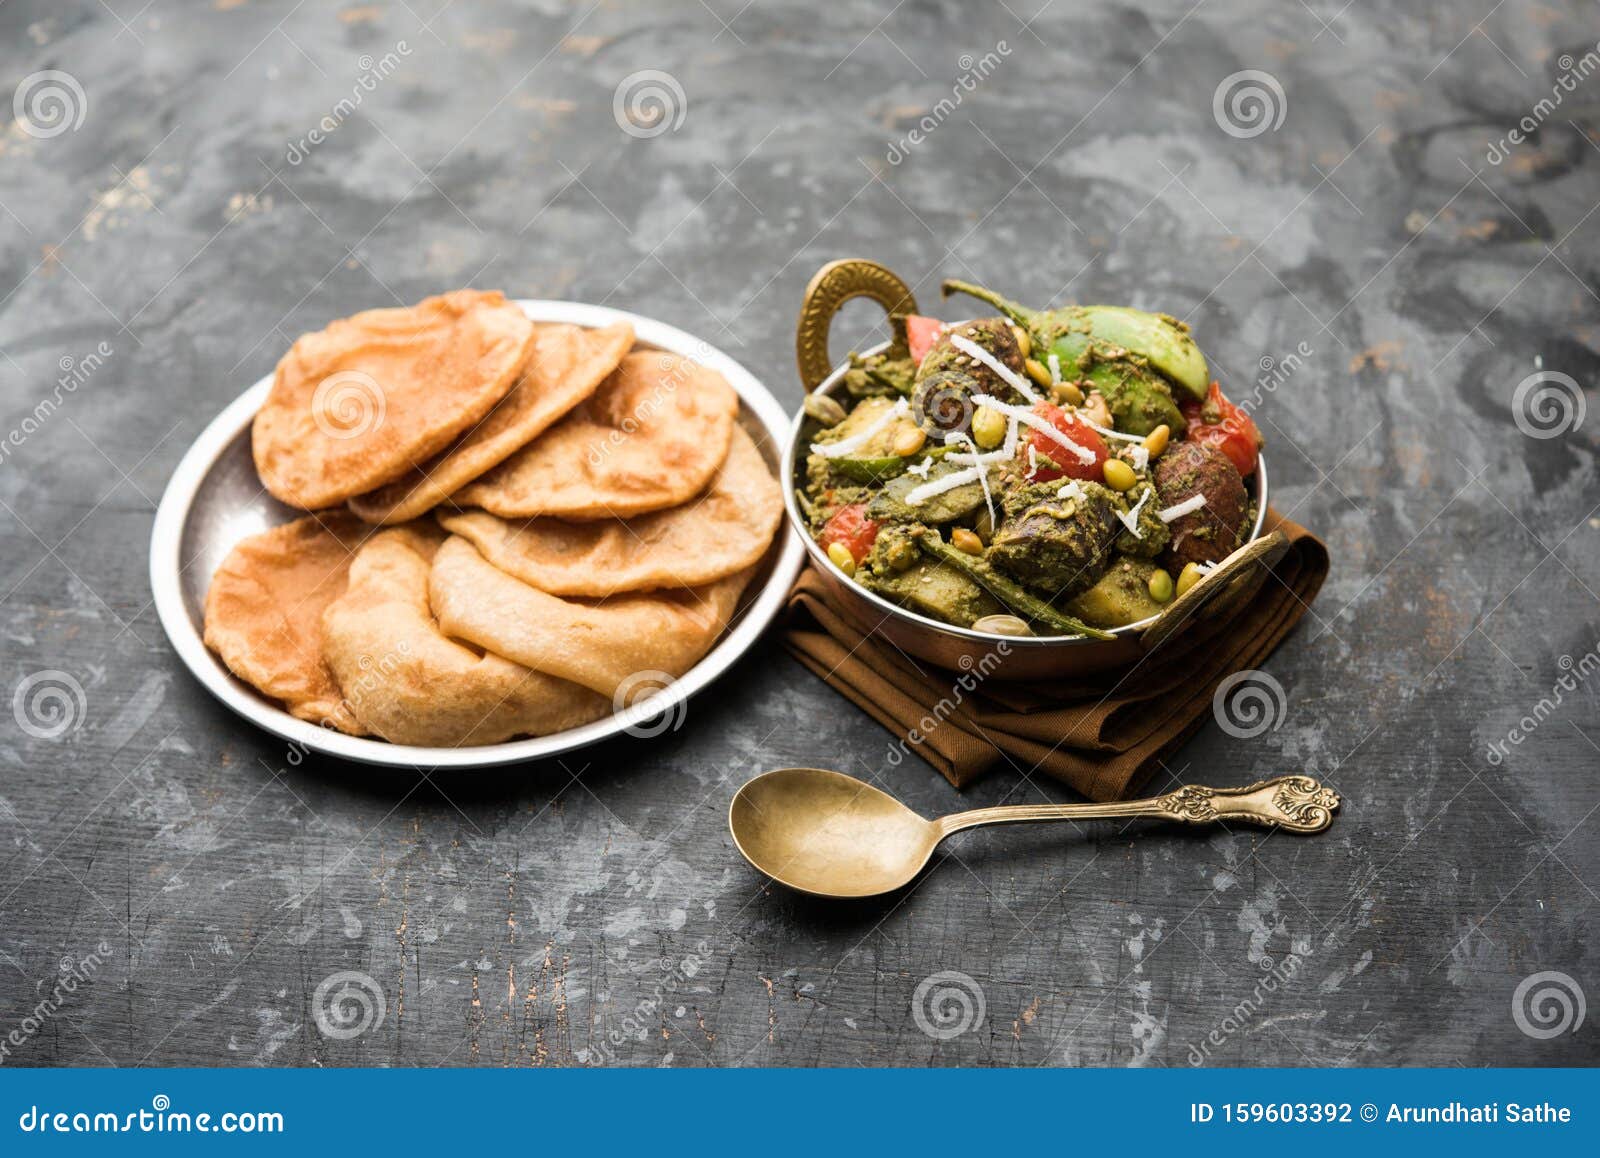 undhiyu is a one pot vegetable casserole dish that is the hallmark of gujarati vegetarian cuisine